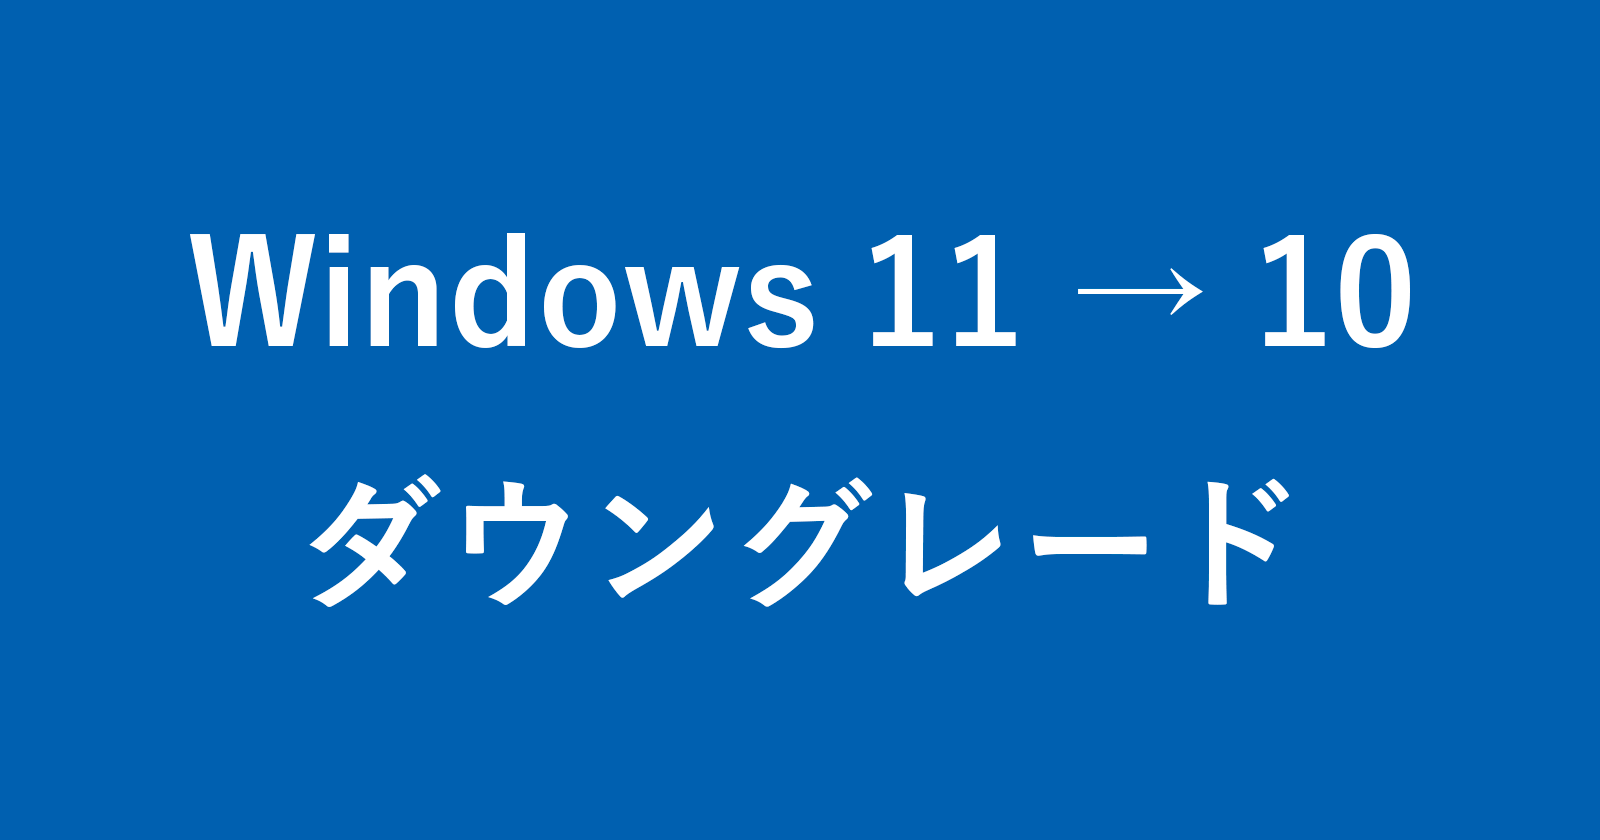 windows 11 10 downgrade